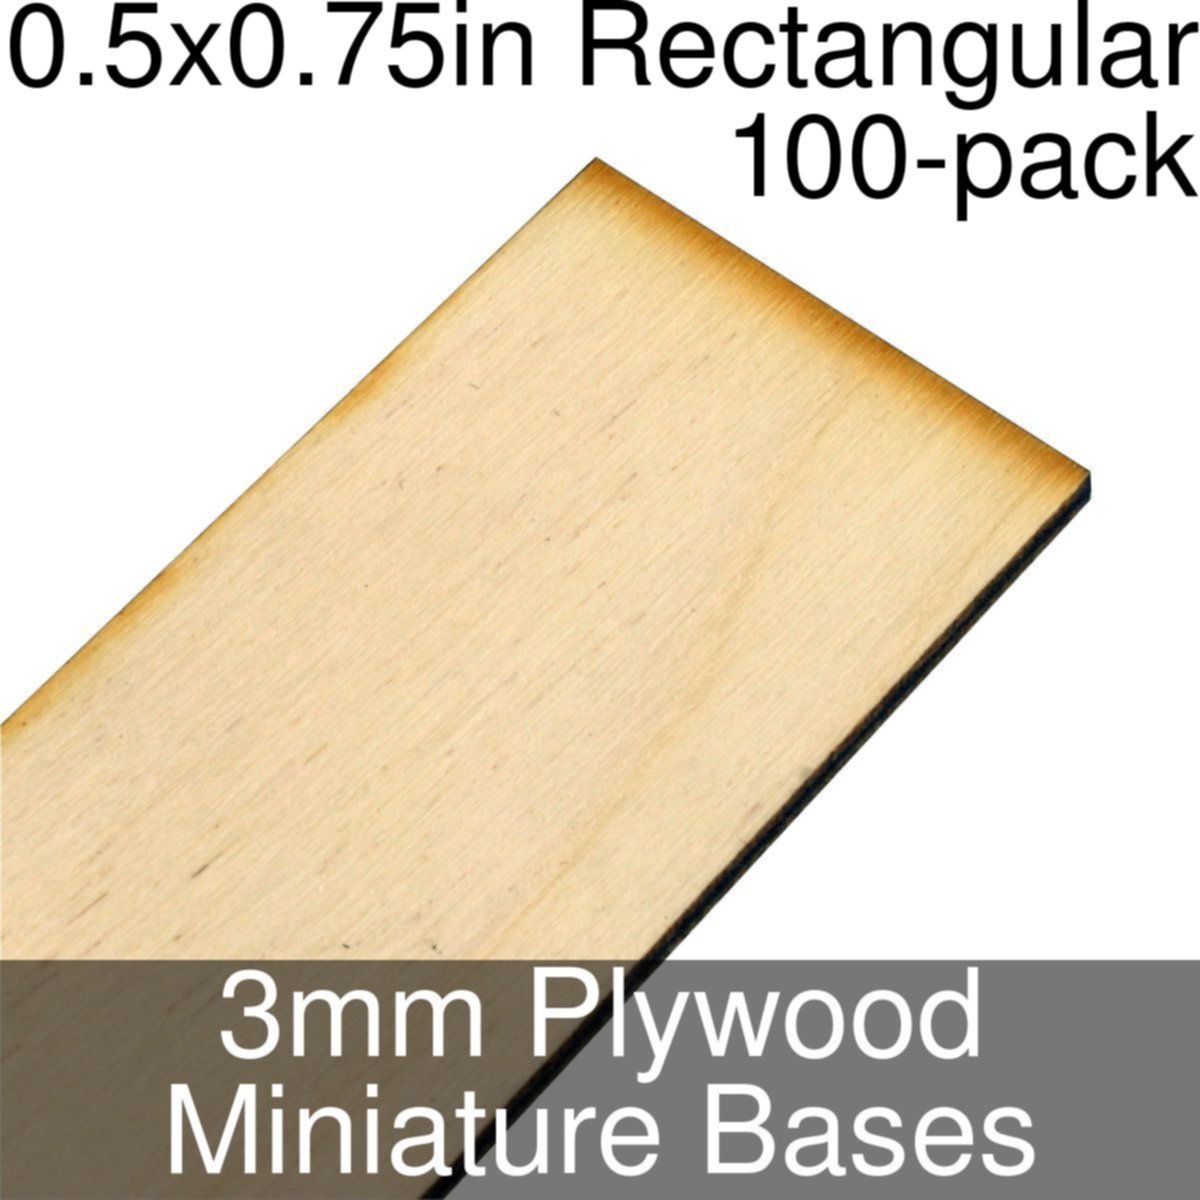 0.5x0.75-inch rectangular miniature bases